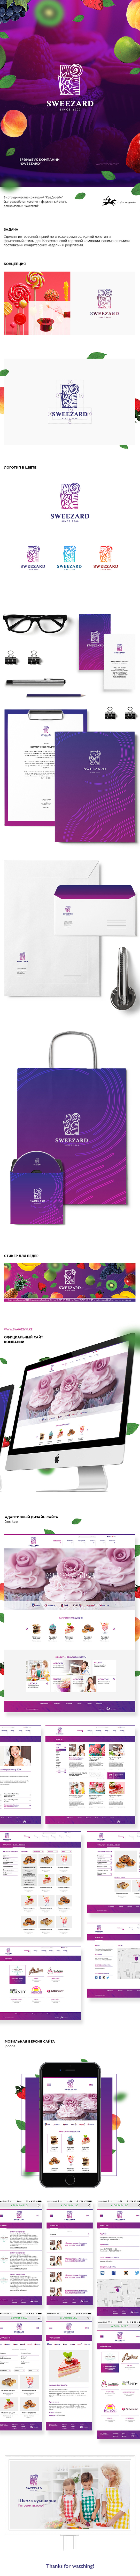 Sweezard sweet Candy almaty kazakhstan logo colors business Europe brandbook identity